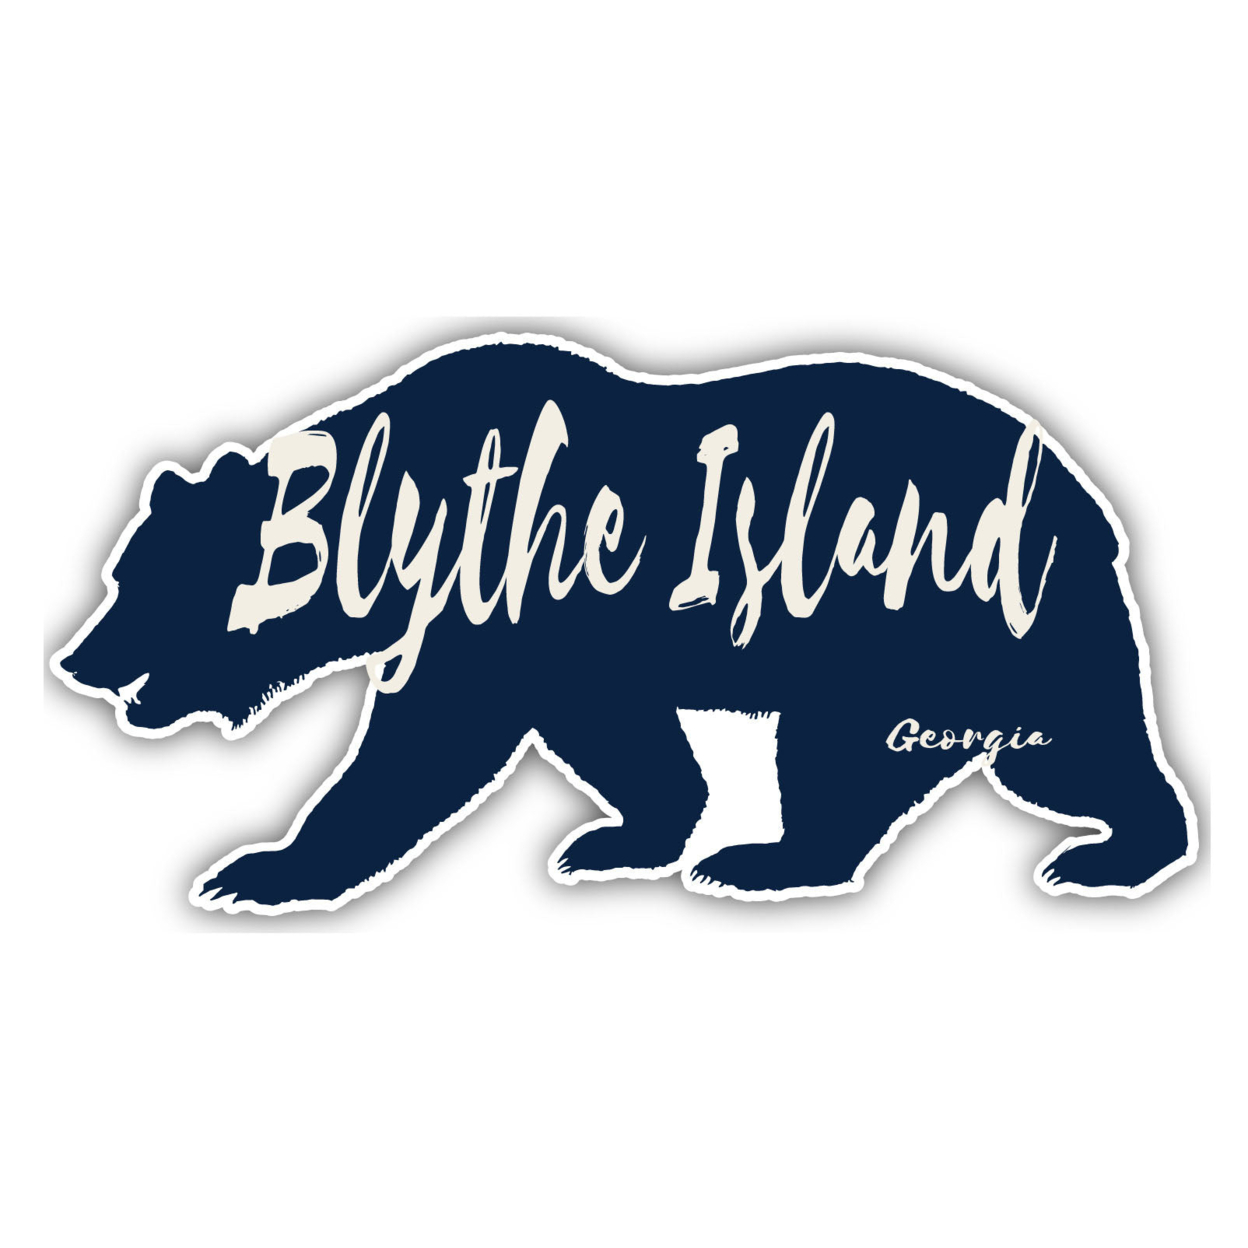 Blythe Island Georgia Souvenir Decorative Stickers (Choose Theme And Size) - 4-Pack, 4-Inch, Bear